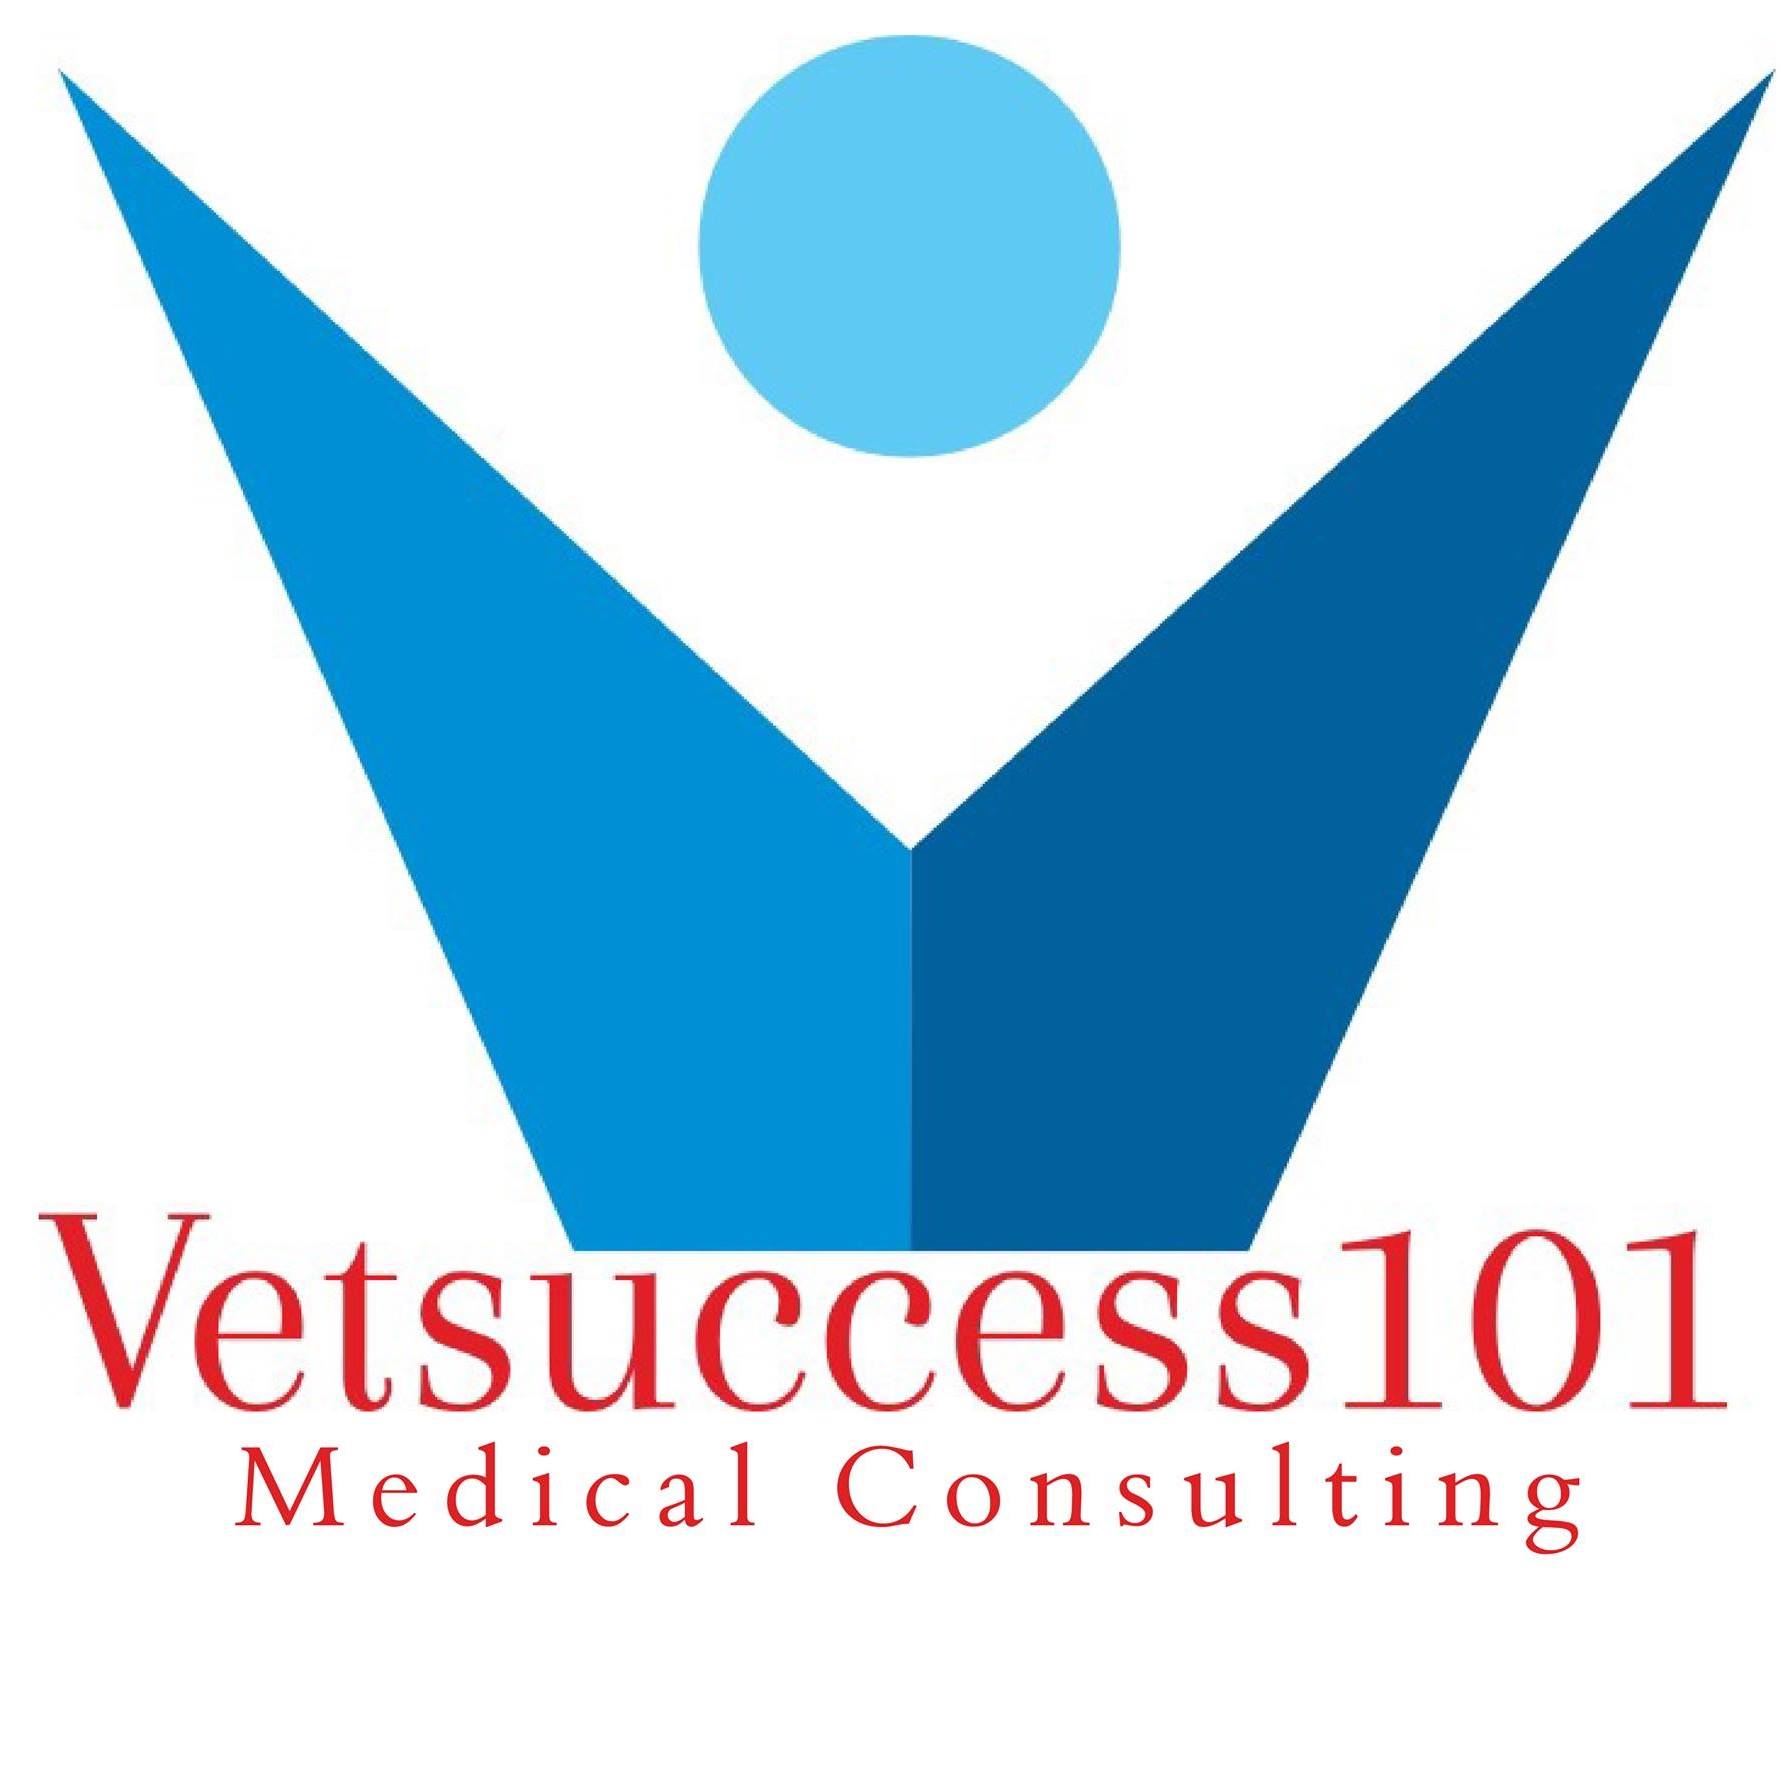 VetSuccess101